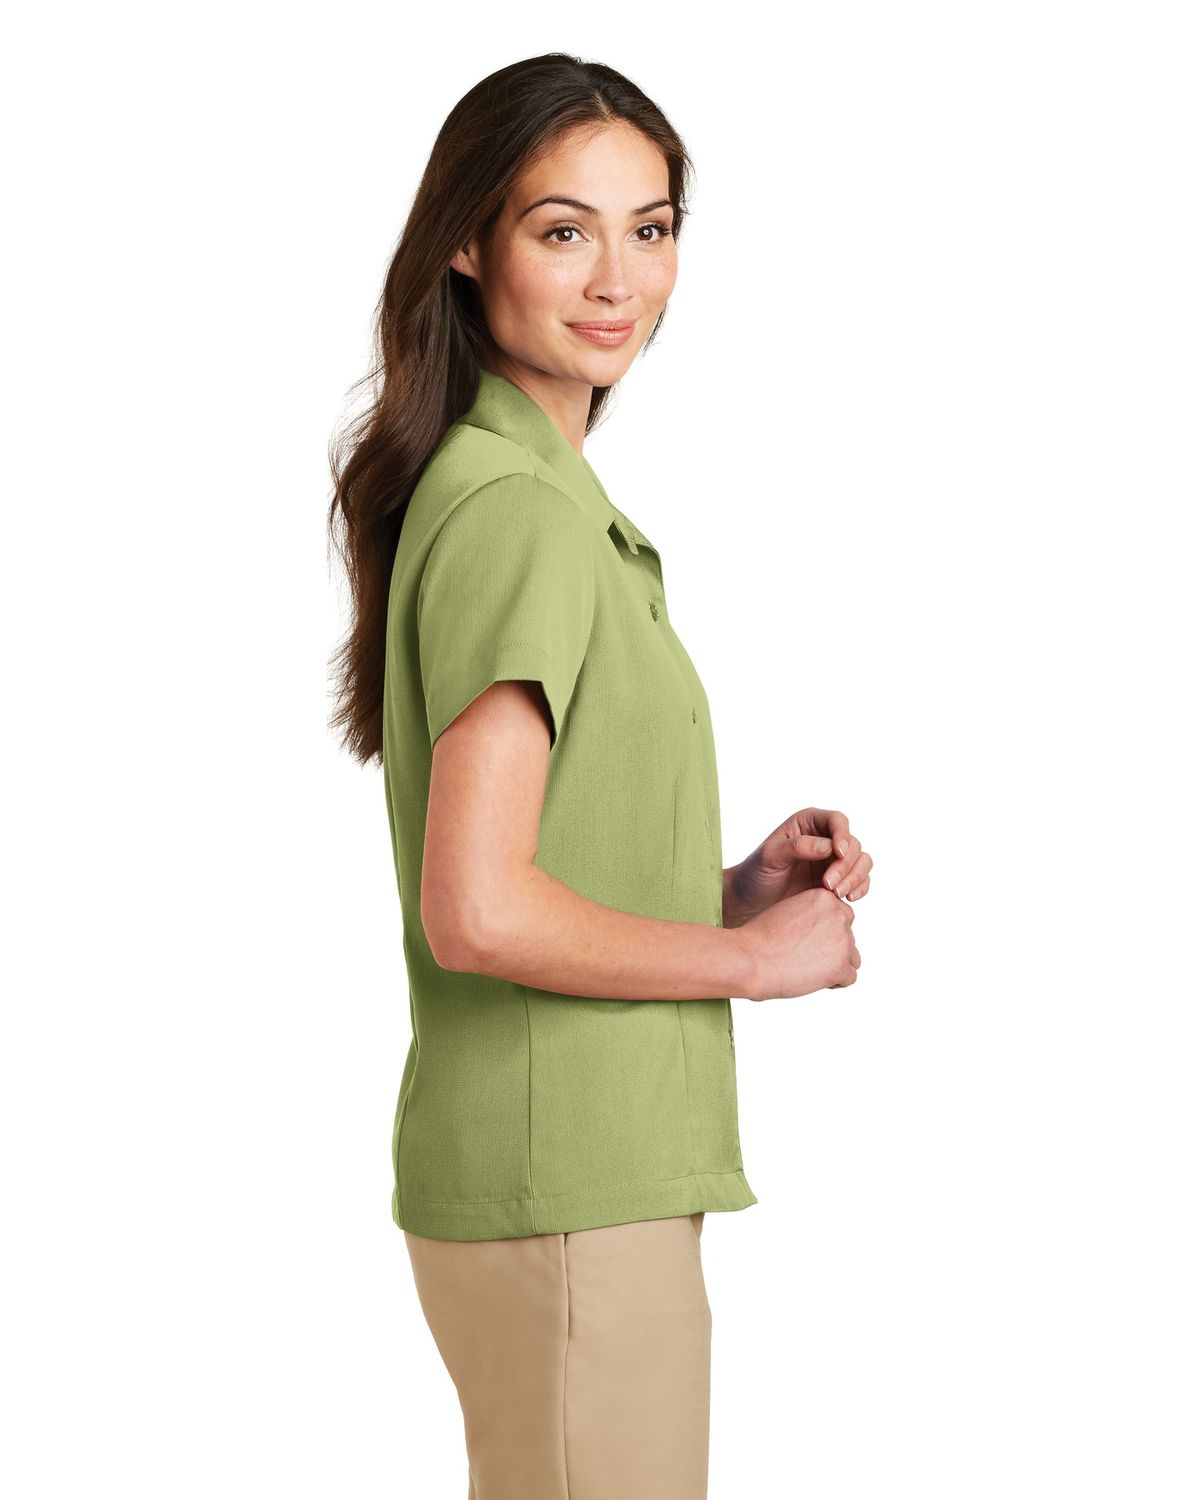 'Port Authority L535 Ladies Easy Care Camp Shirt'